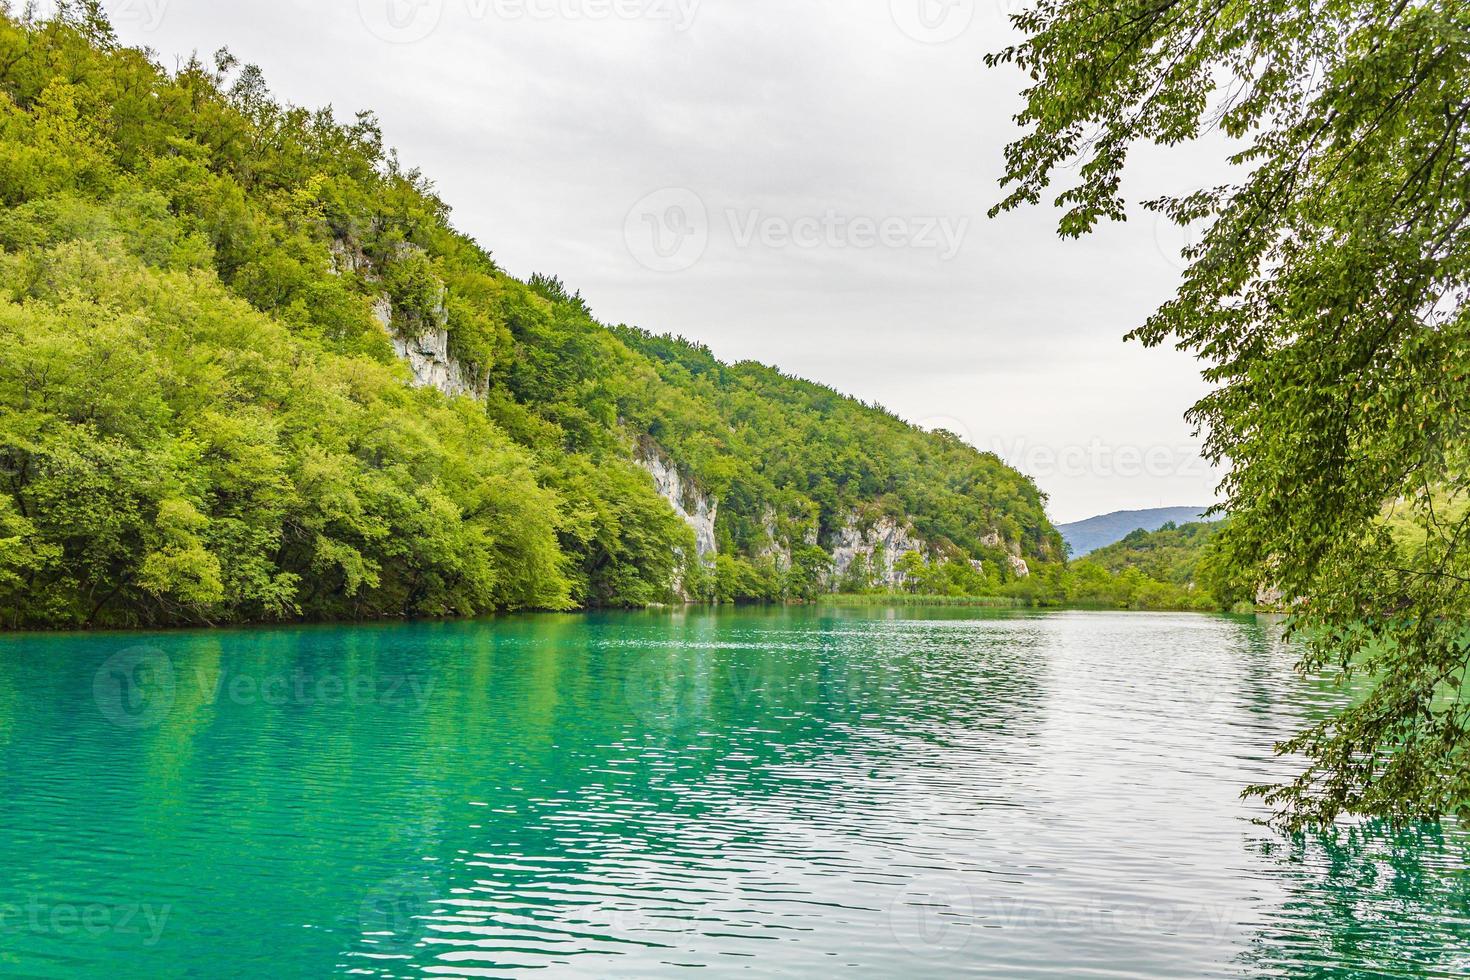 plitvice lakes national park paisagem águas turquesas na croácia. foto